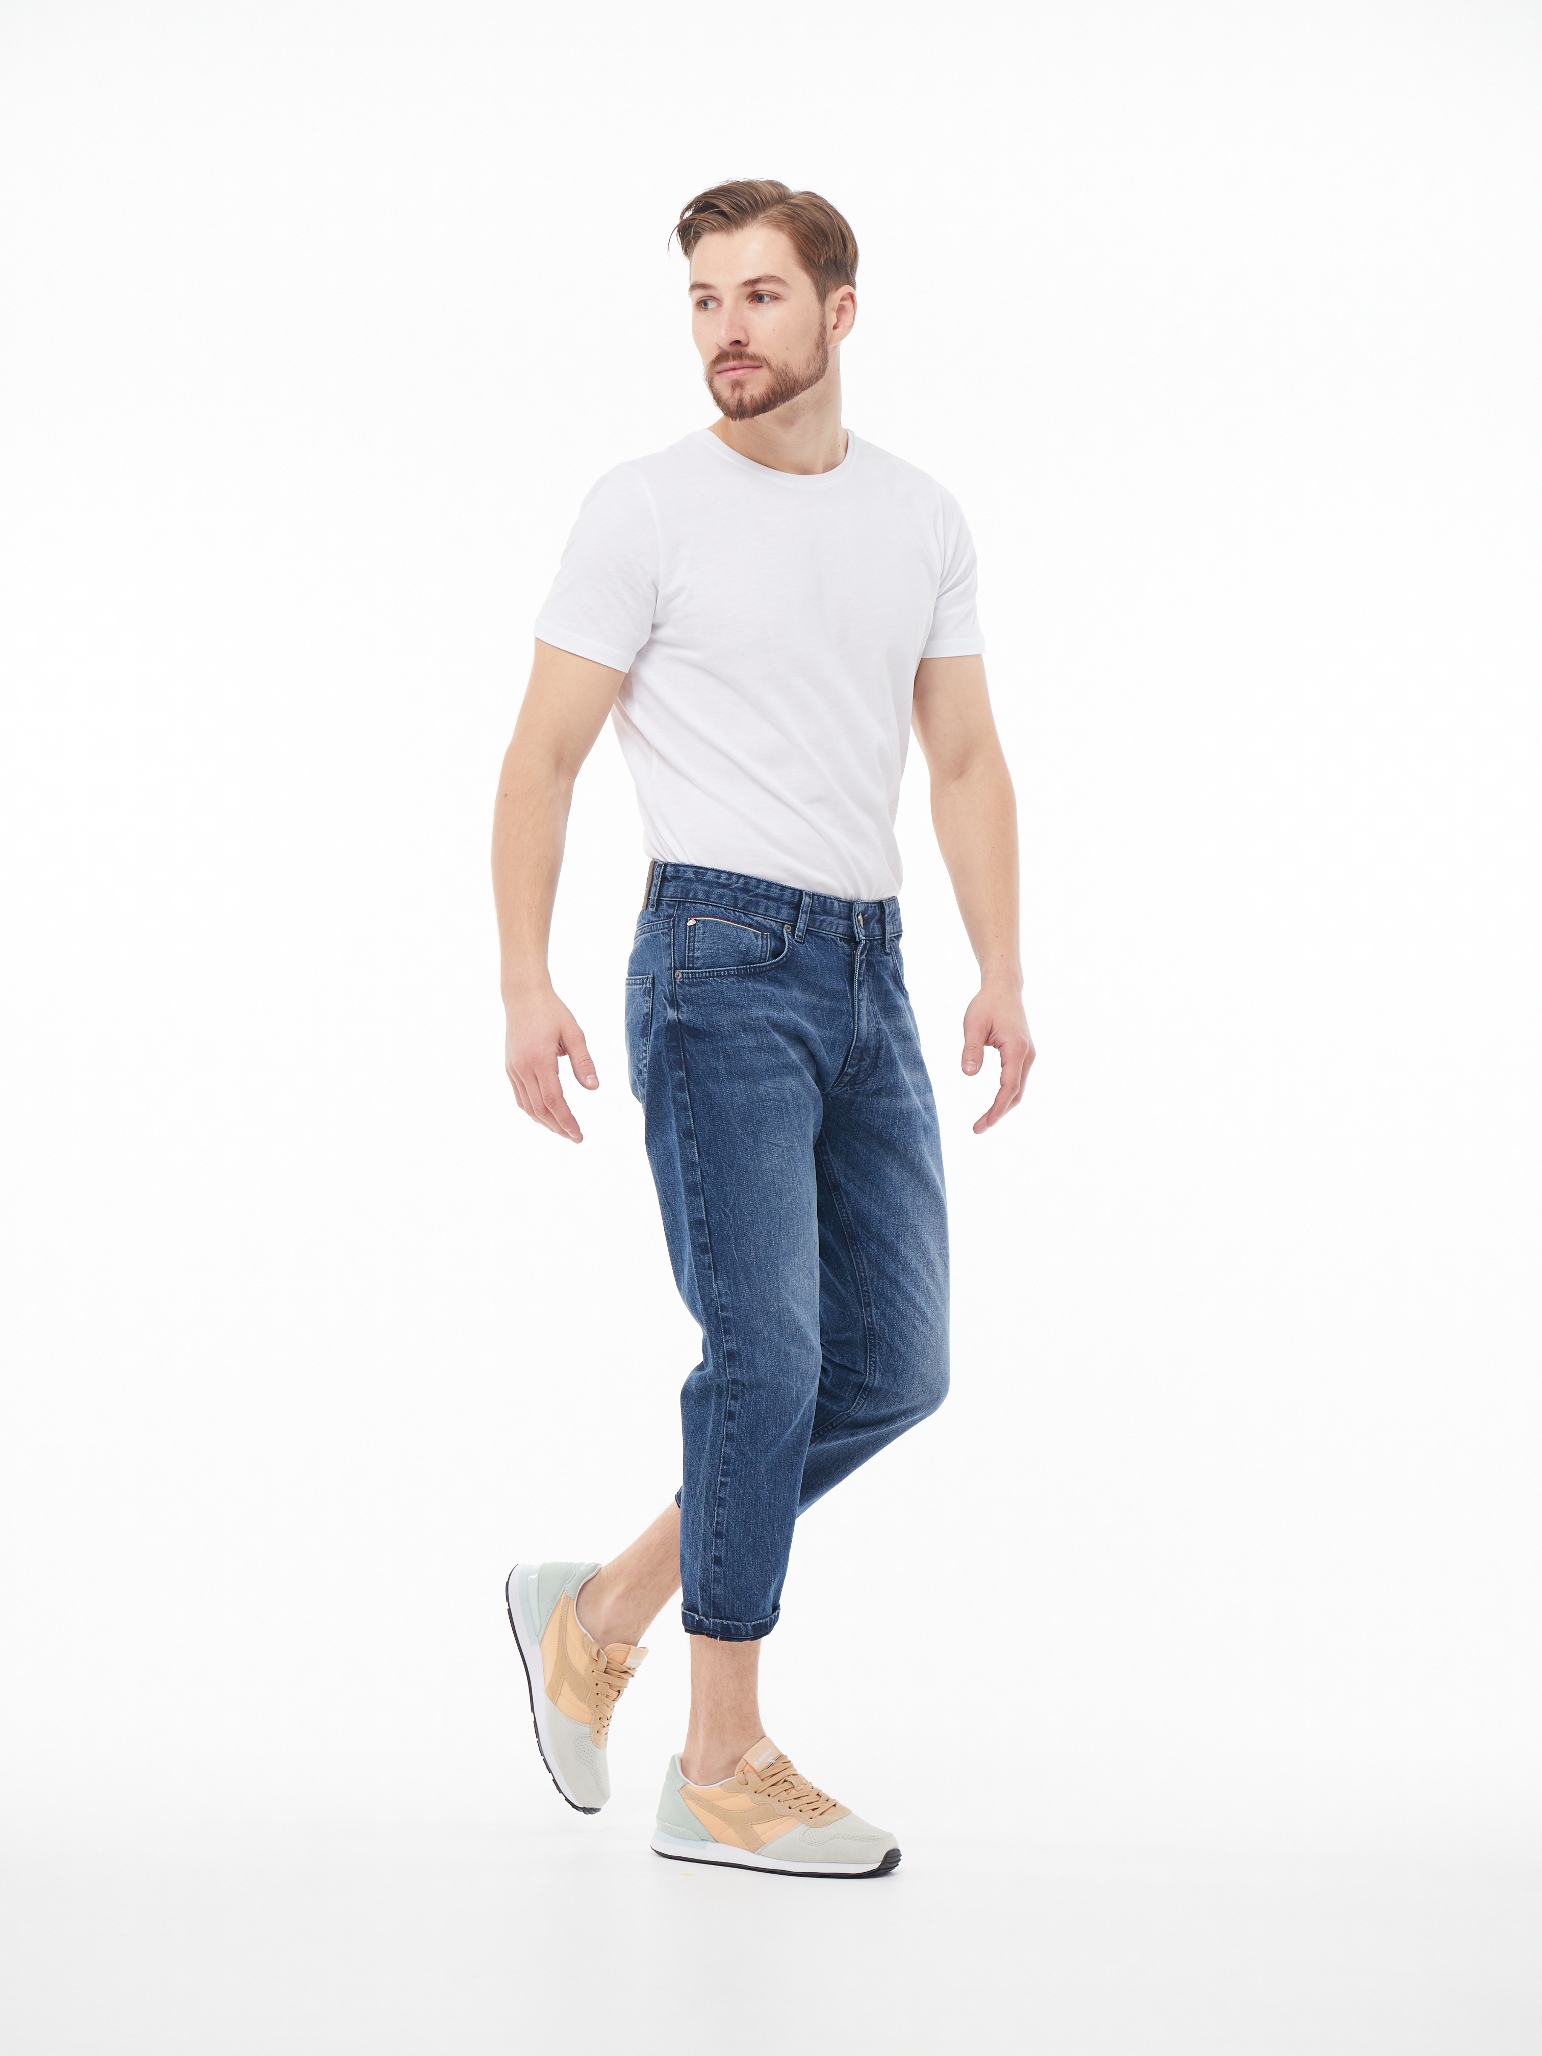 Чоловічі джинси Cropped GUSTAV 1072 | Men's jeans Cropped GUSTAV 1072